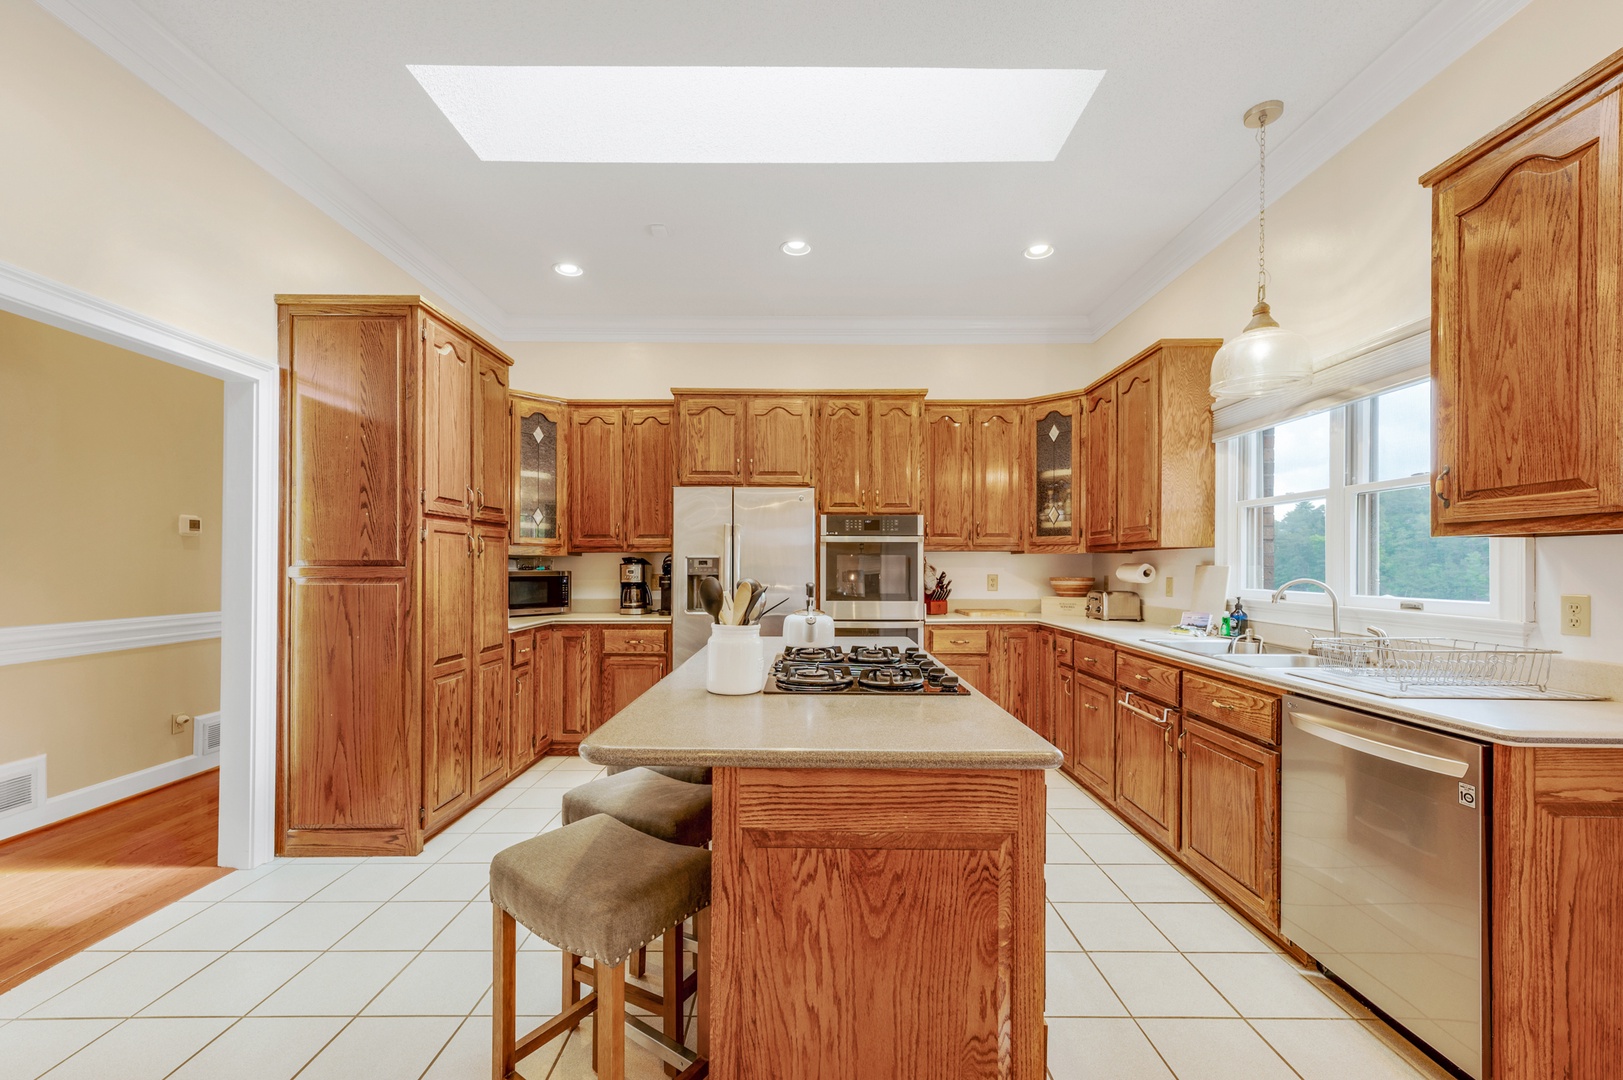 Blue Ridge Lakeside Chateau- Full size kitchen